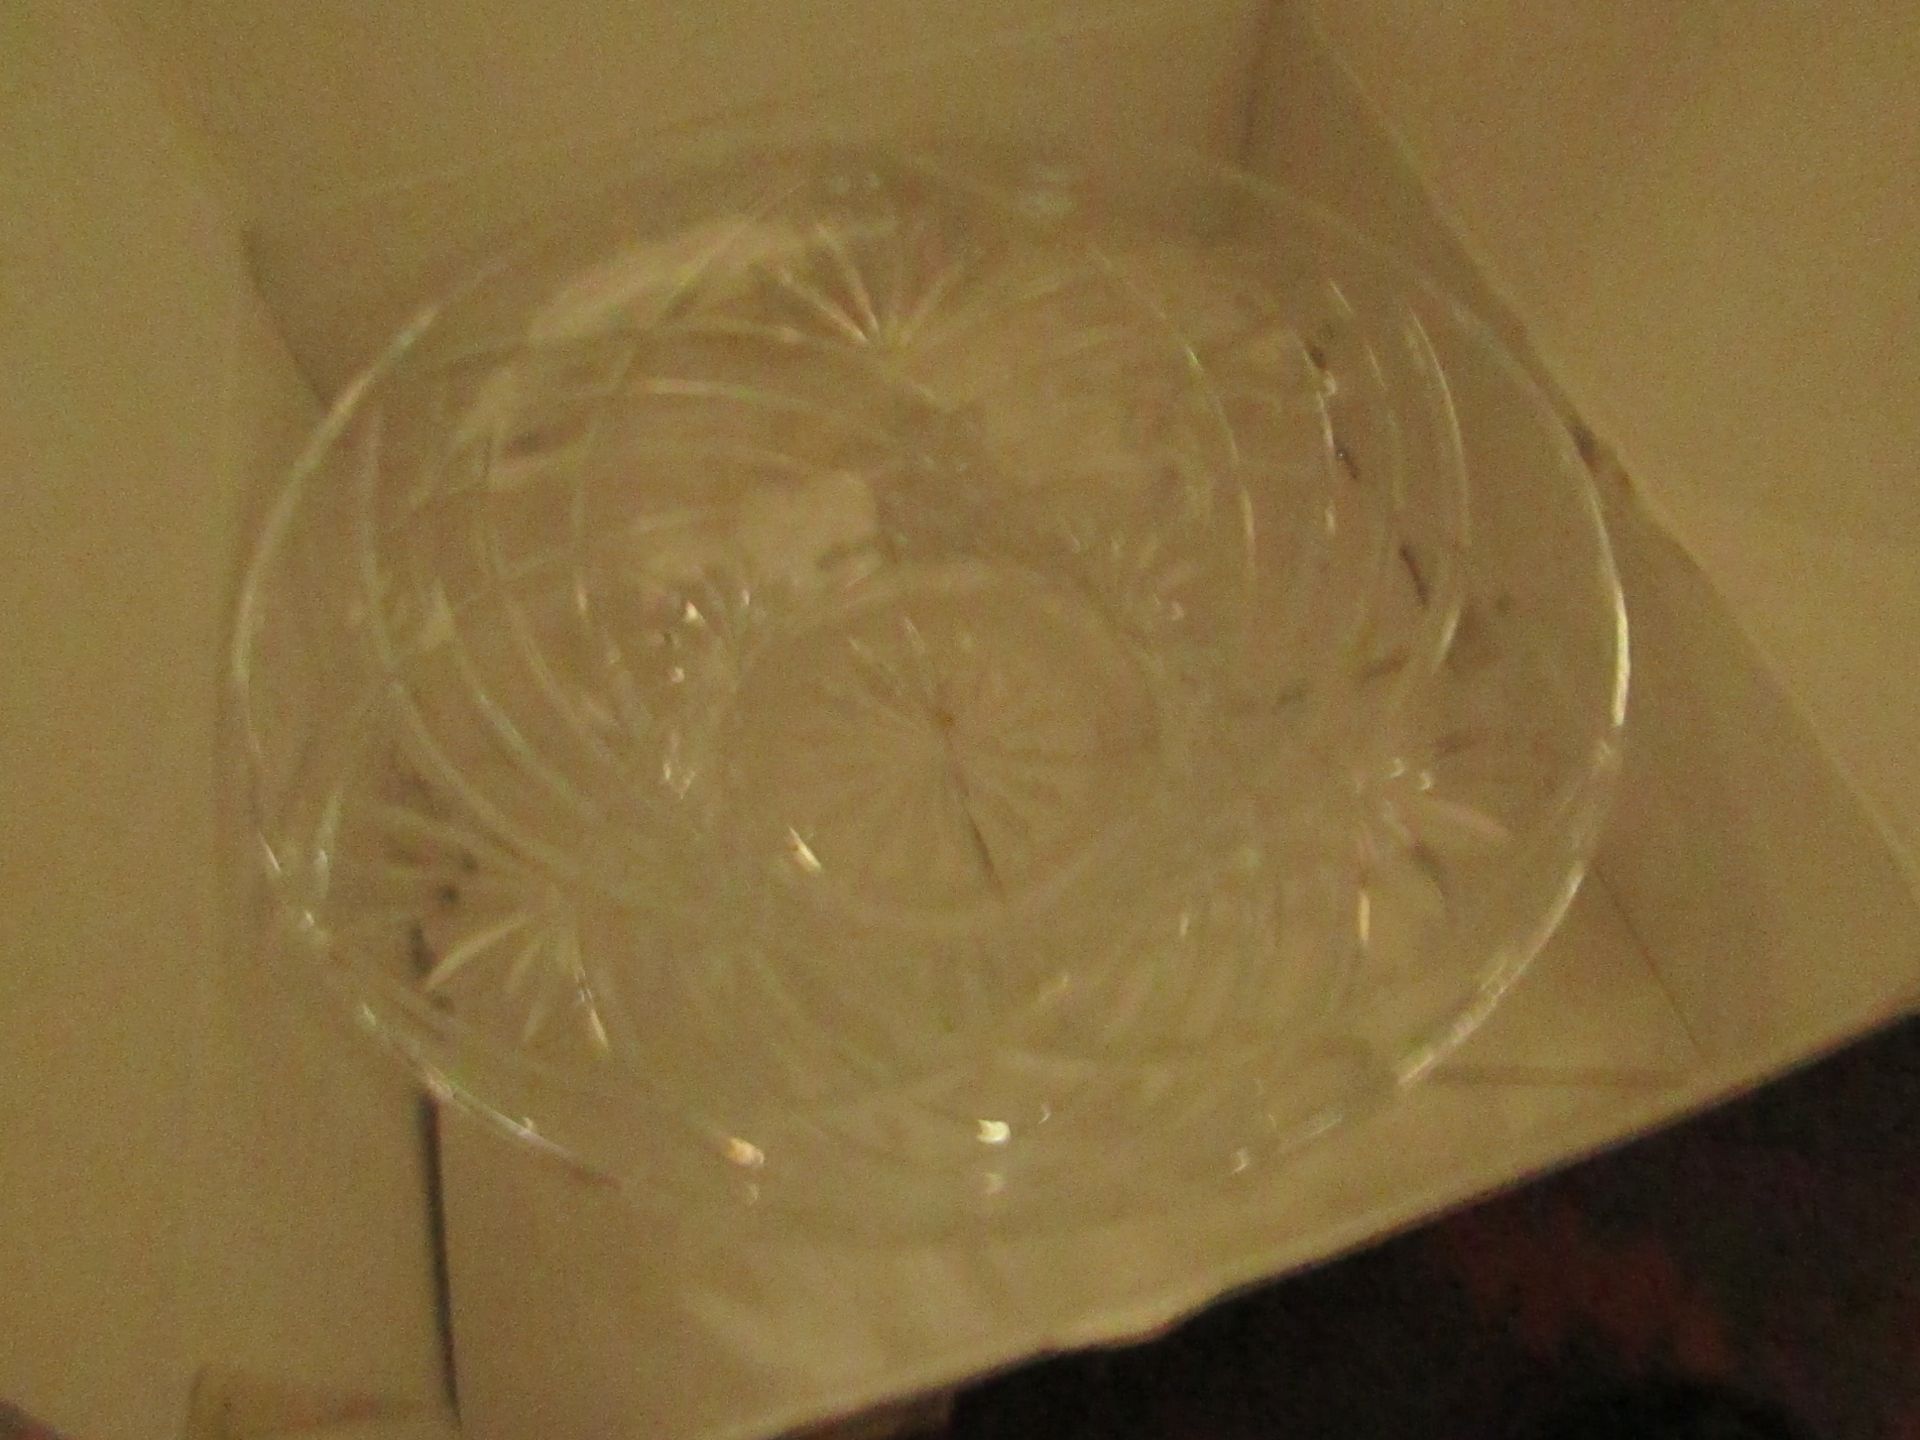 RCR Crystal fruit bowl, new and boxed